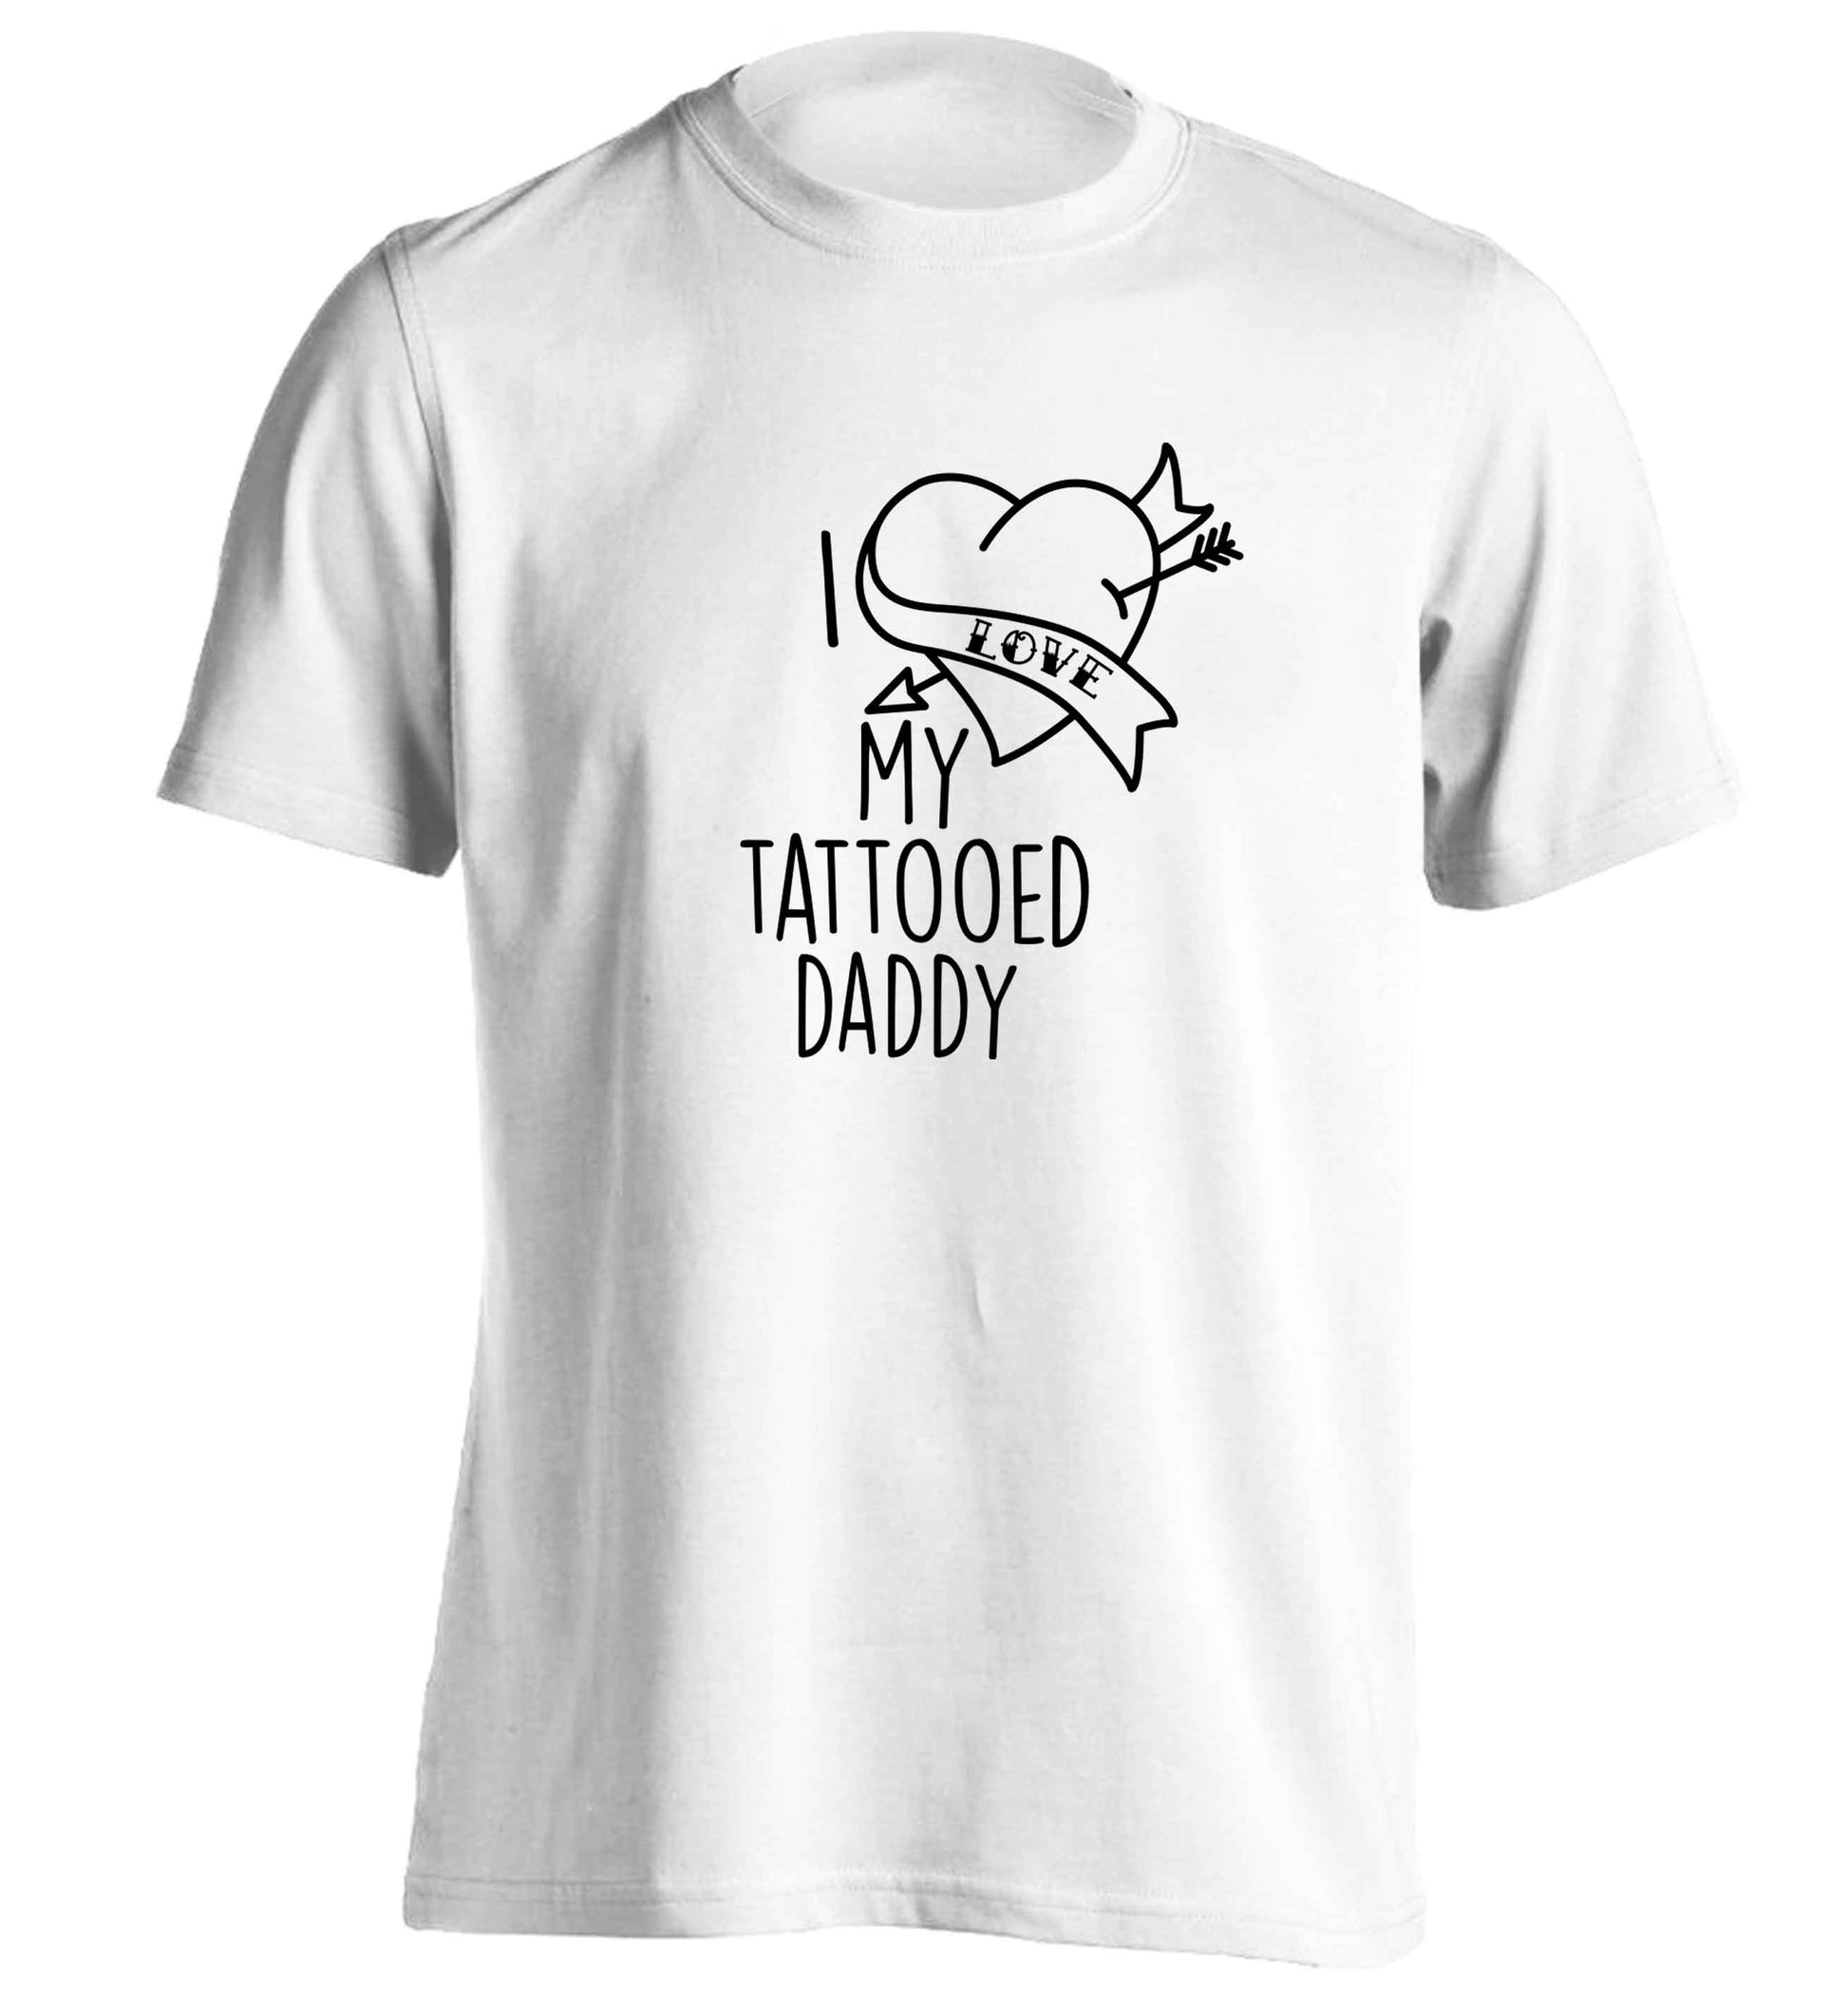 I love my tattooed daddy adults unisex white Tshirt 2XL